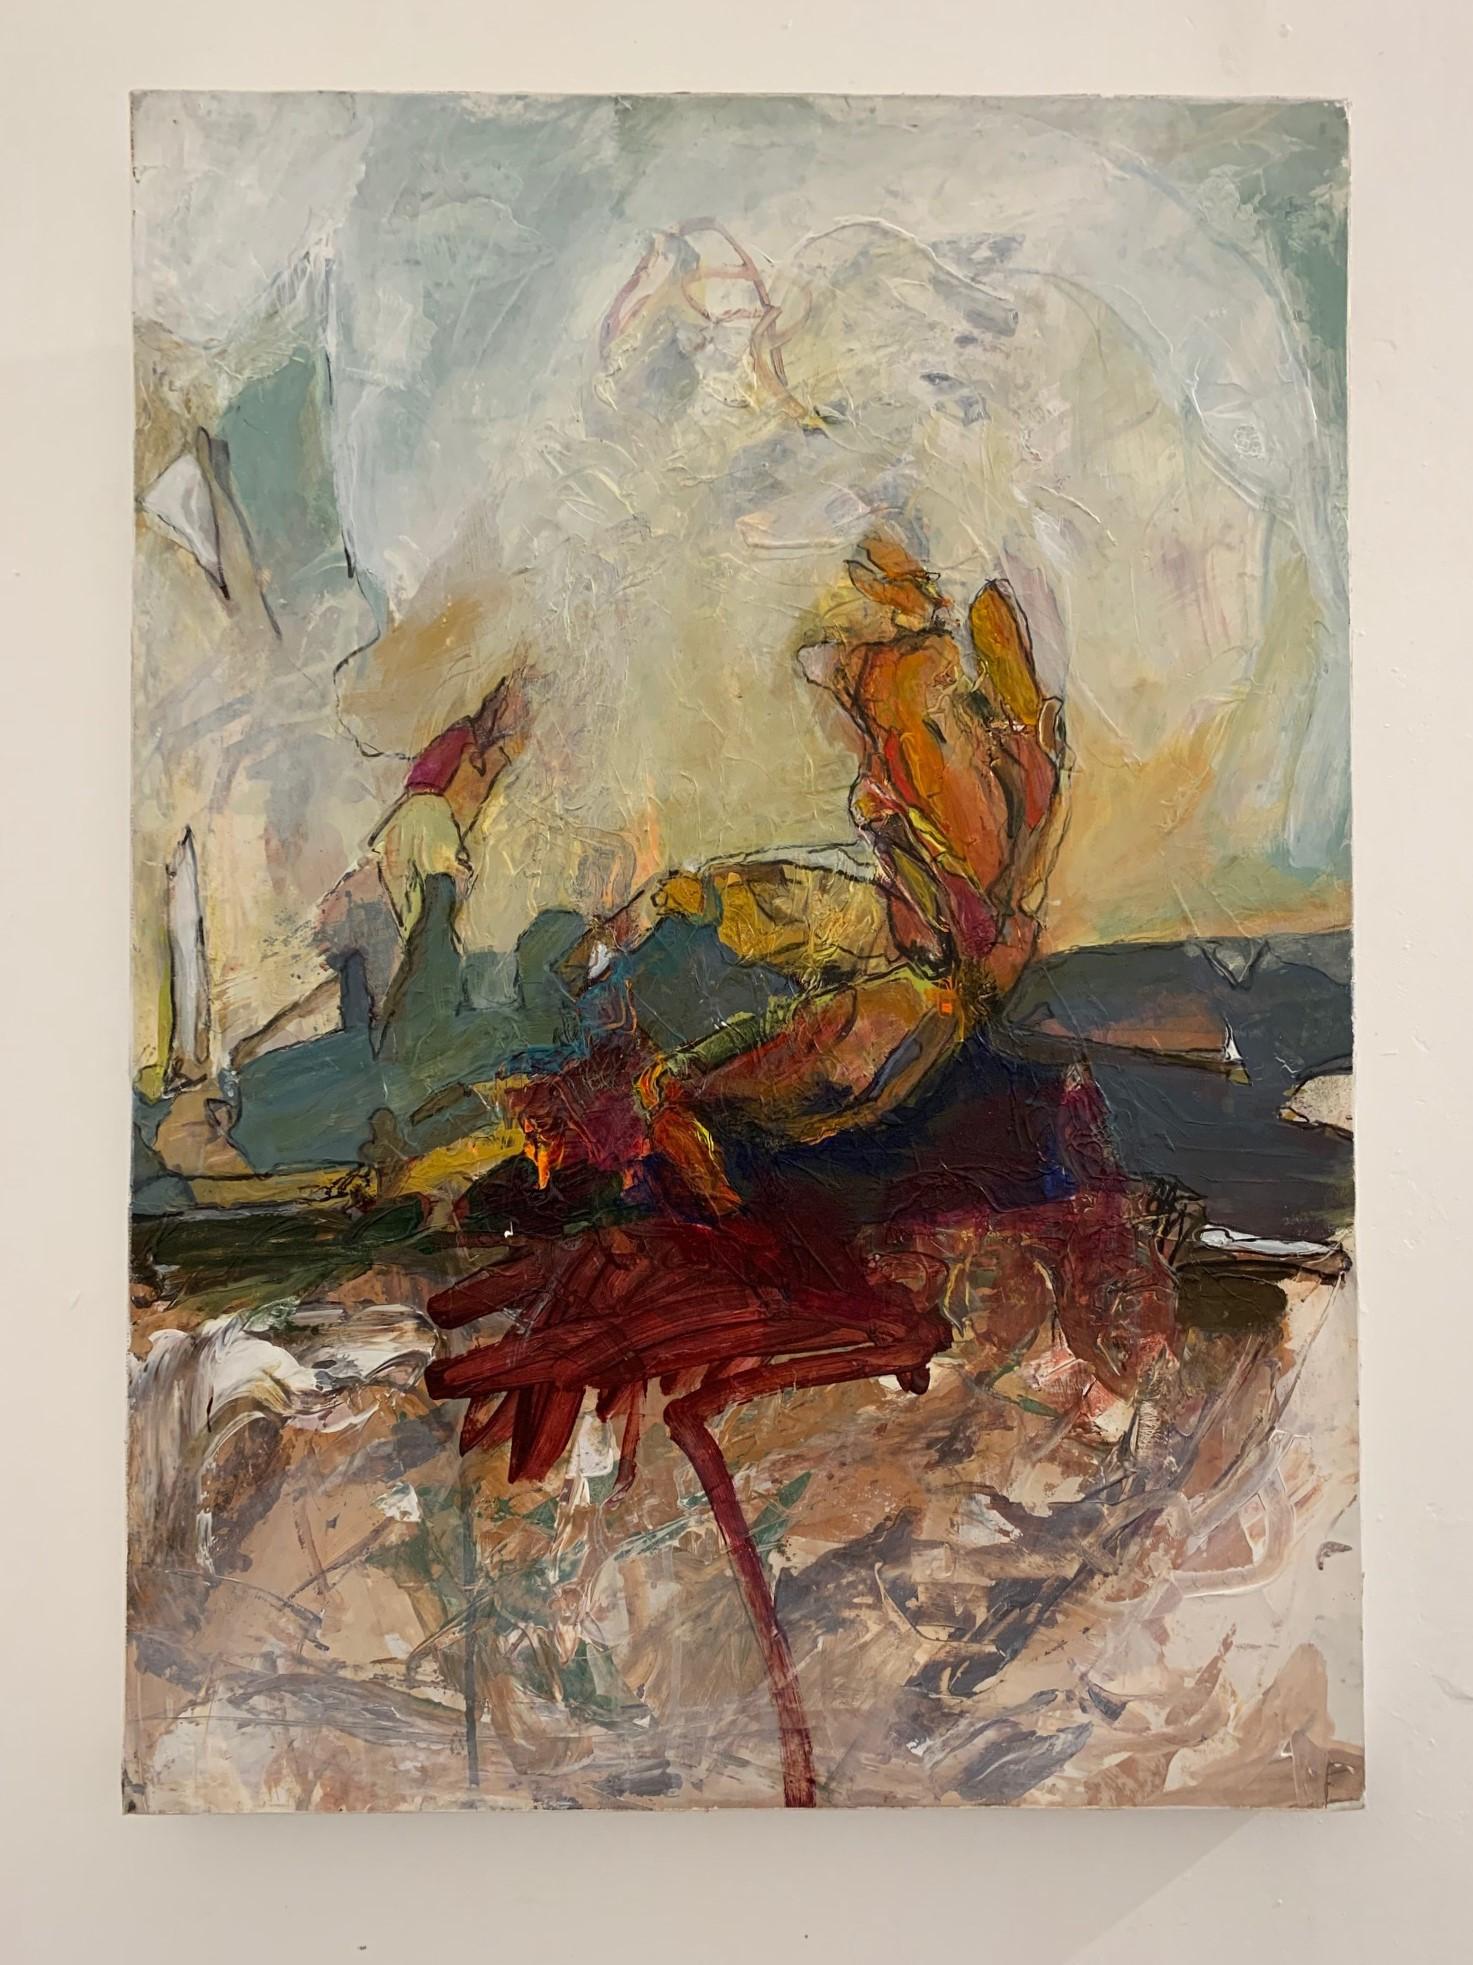 Harry Gundersen Abstract Painting - Caldera's Edge, 2018